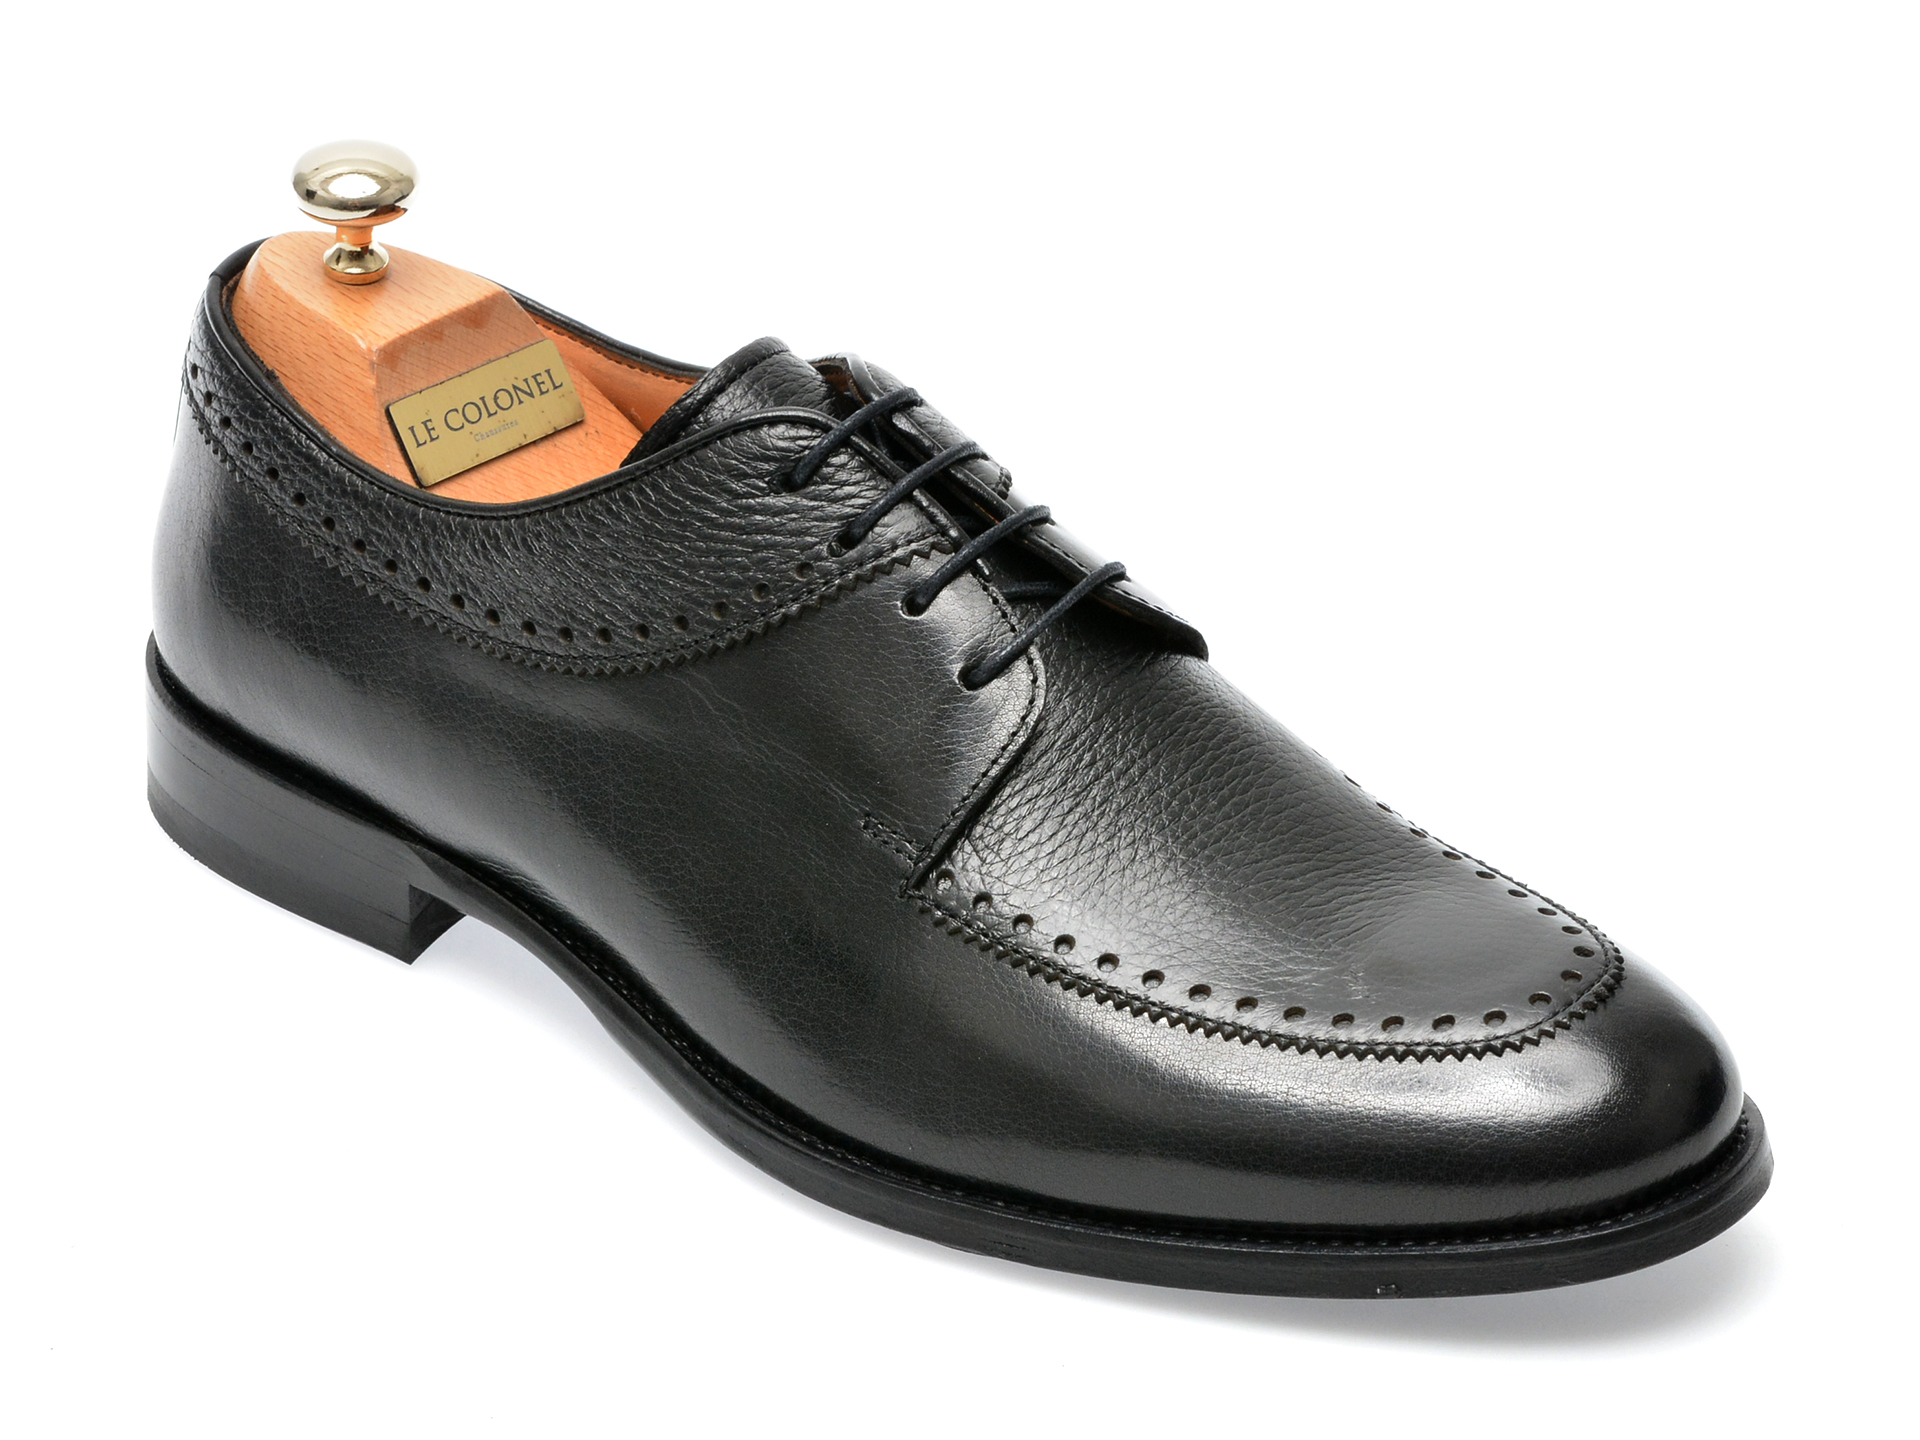 Pantofi LE COLONEL negri, 45266, din piele naturala /barbati/pantofi